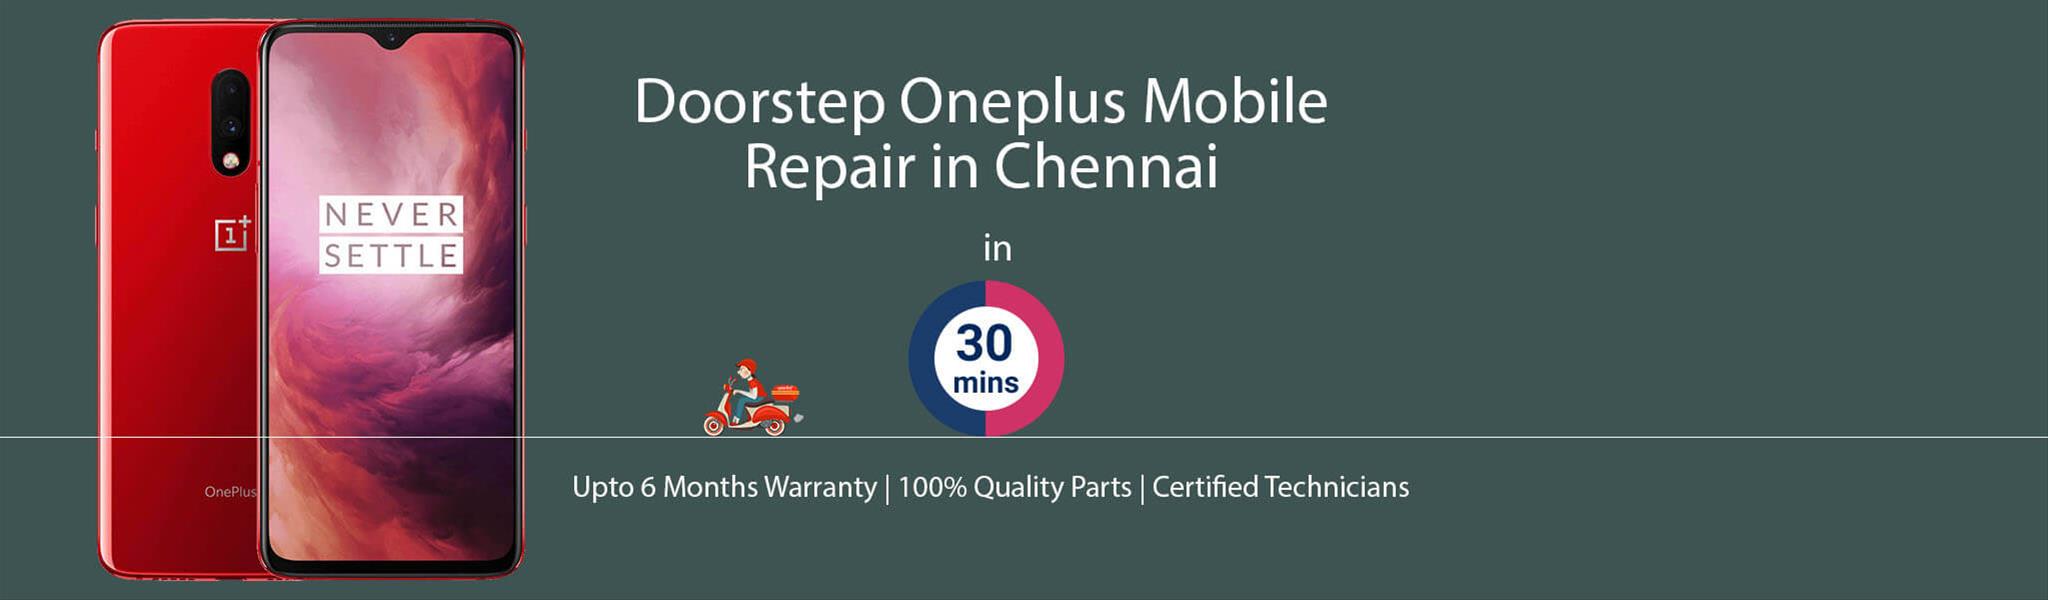 oneplus-repair-service-banner-chennai.jpg